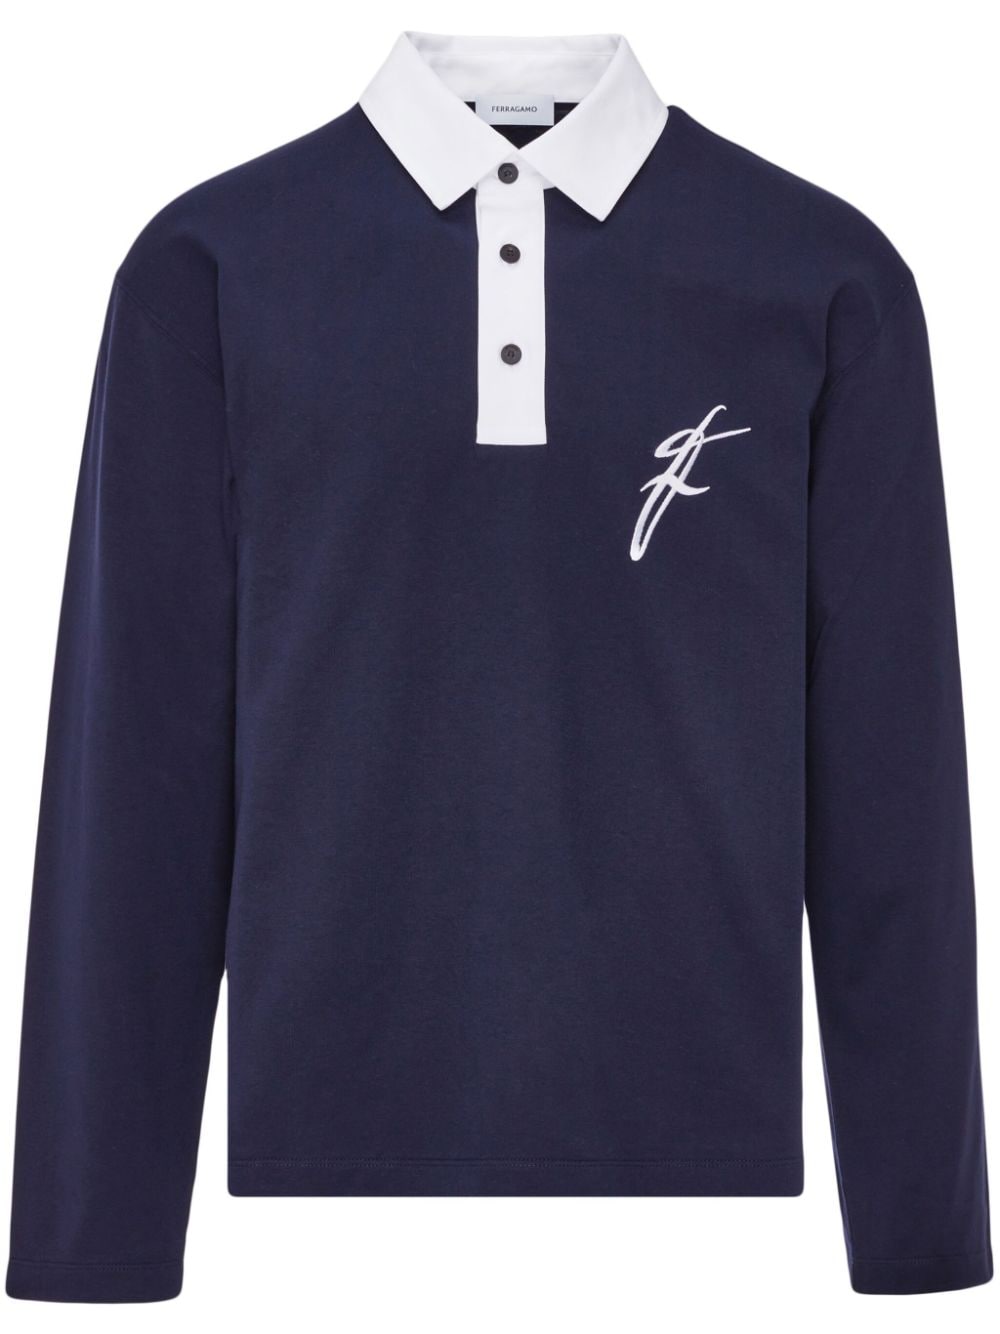 Ferragamo Poloshirt mit Logo-Stickerei - Blau von Ferragamo